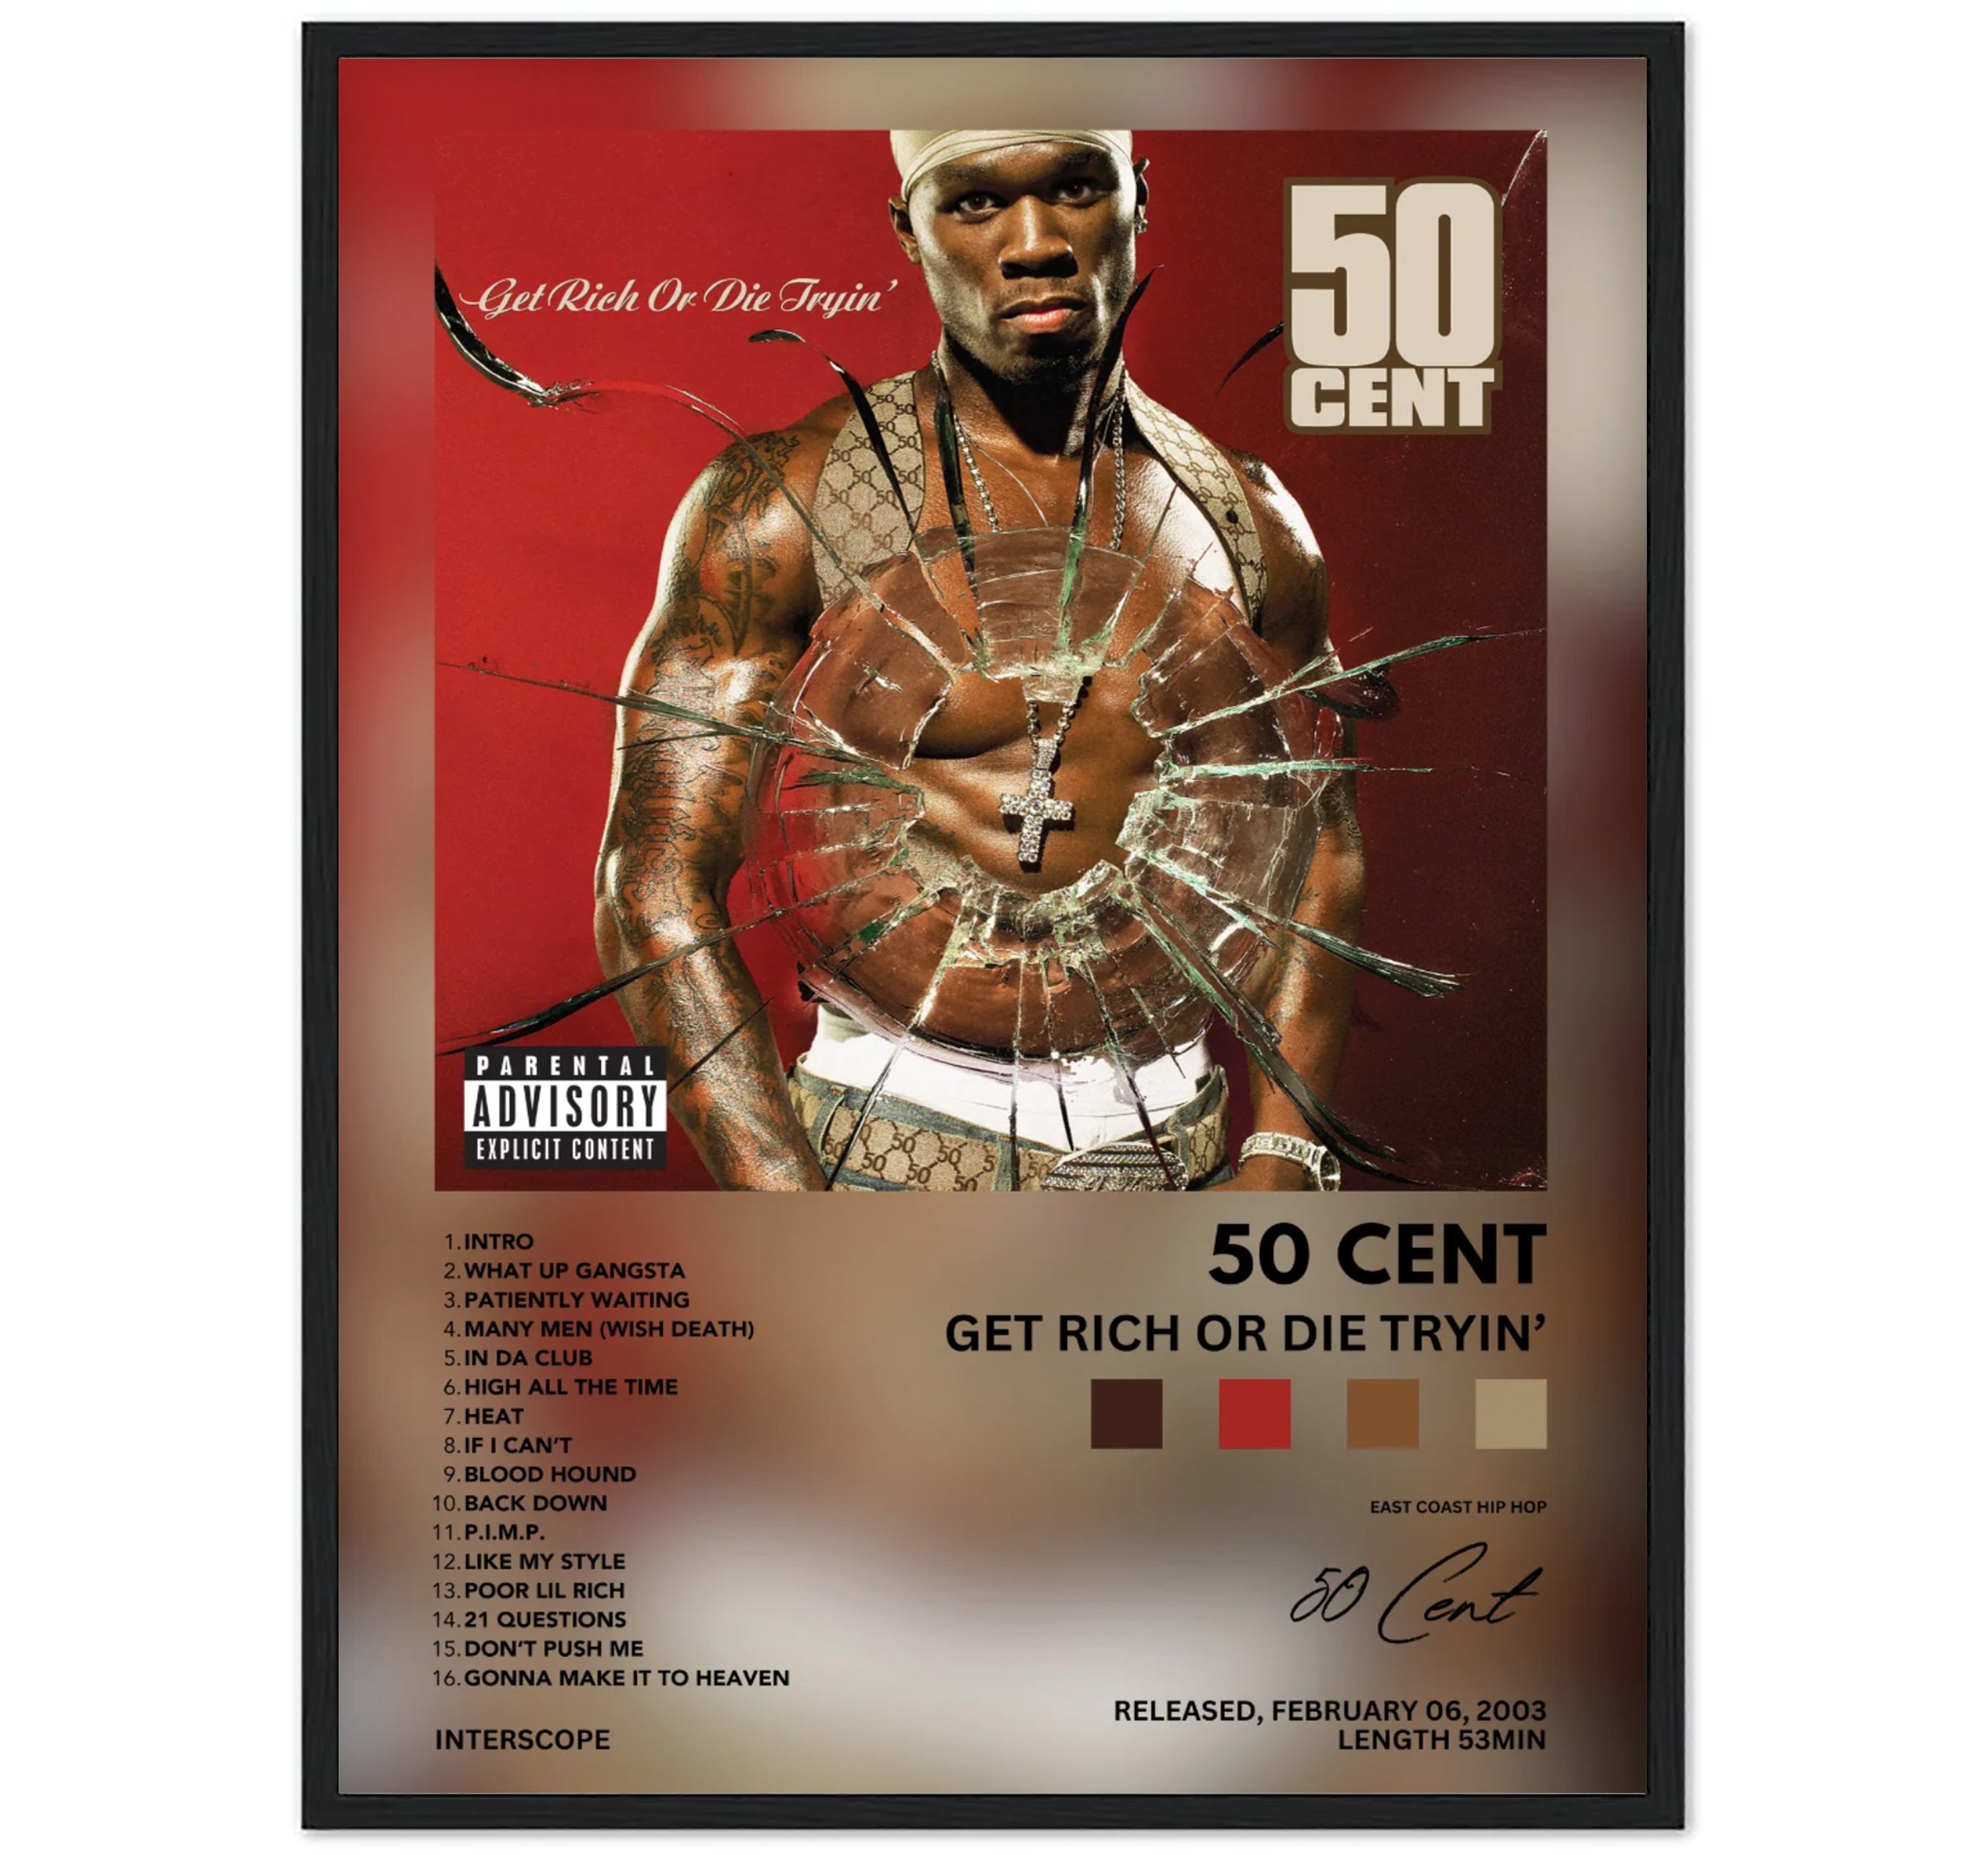 50 Cent "Get Rich or Die Tryin"